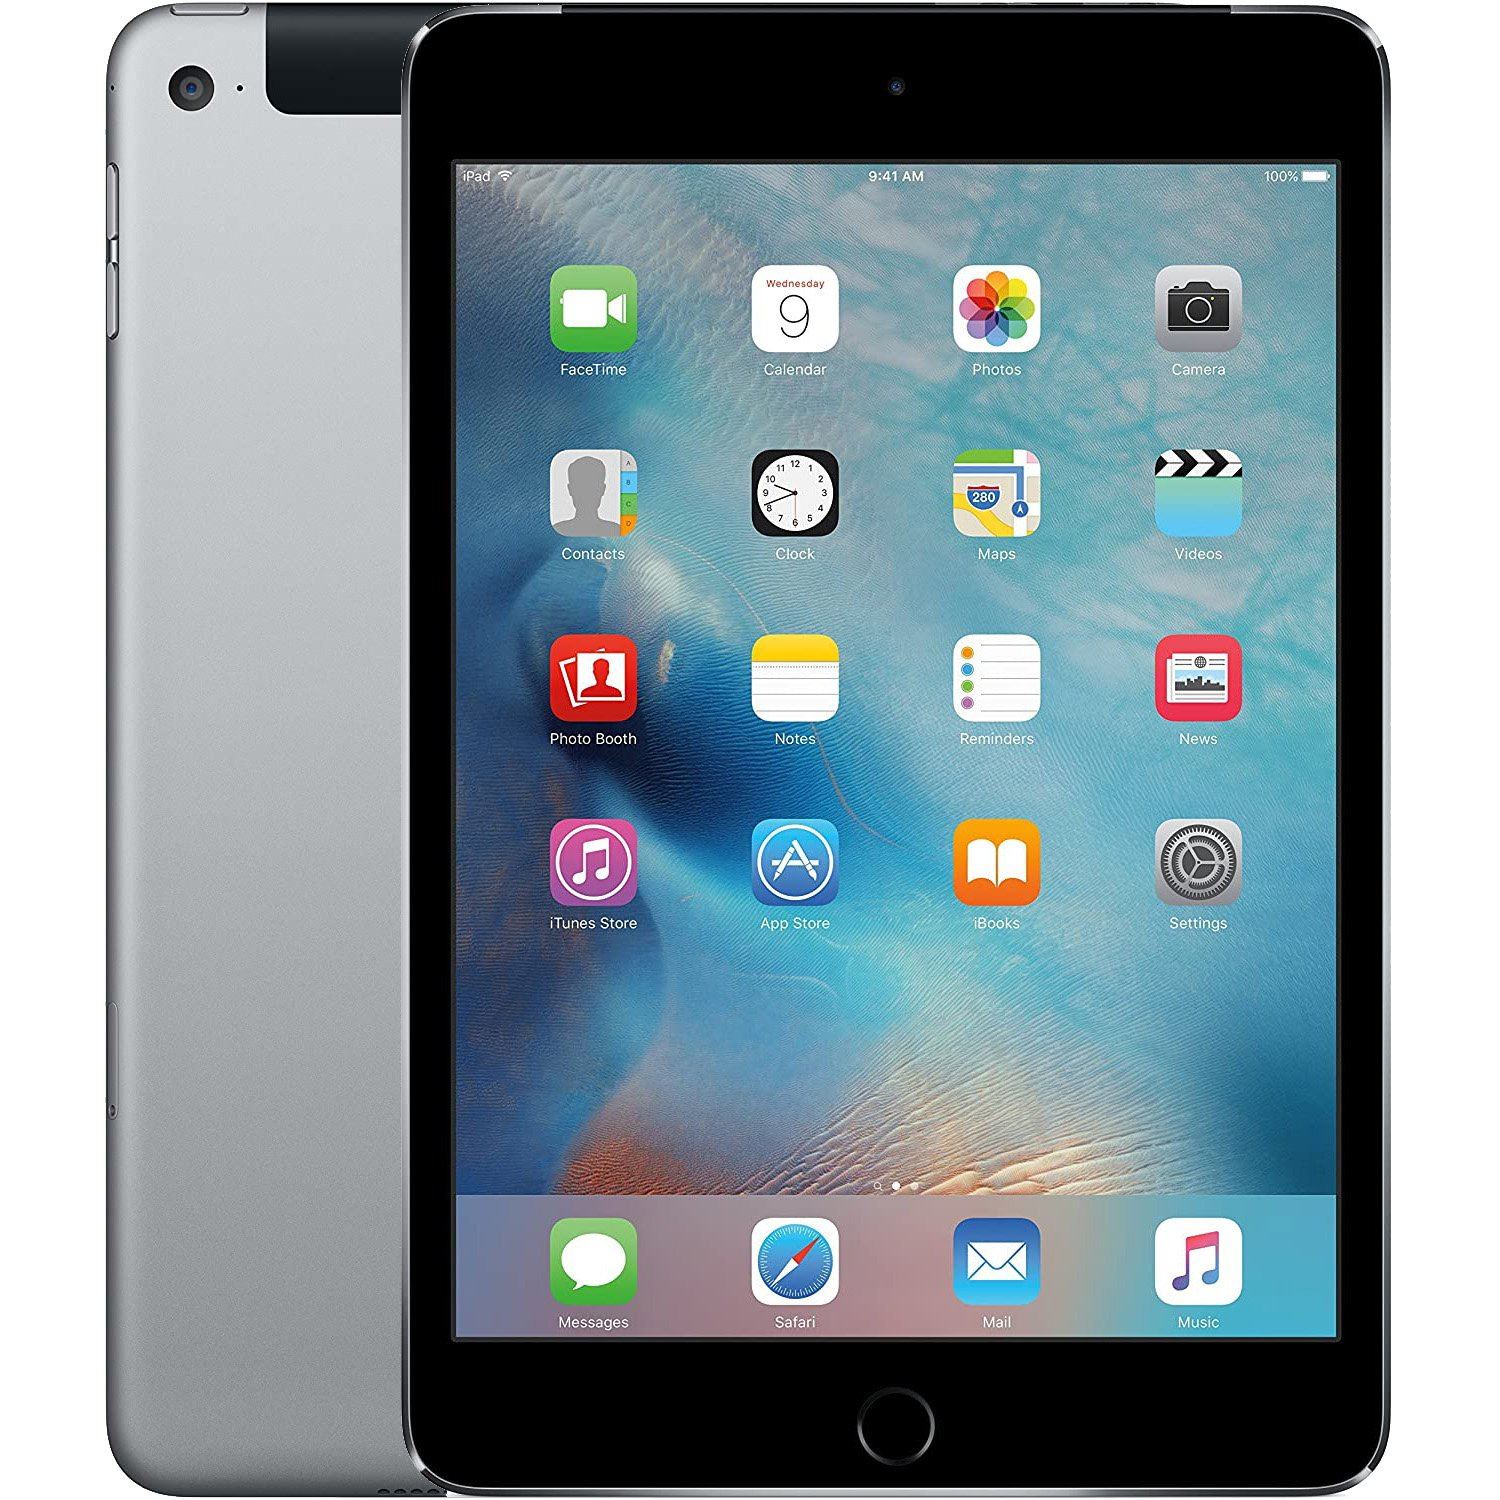 Apple iPad Mini 4 WiFi + Cellular 4G LTE - Fully Unlocked (Refurbished)